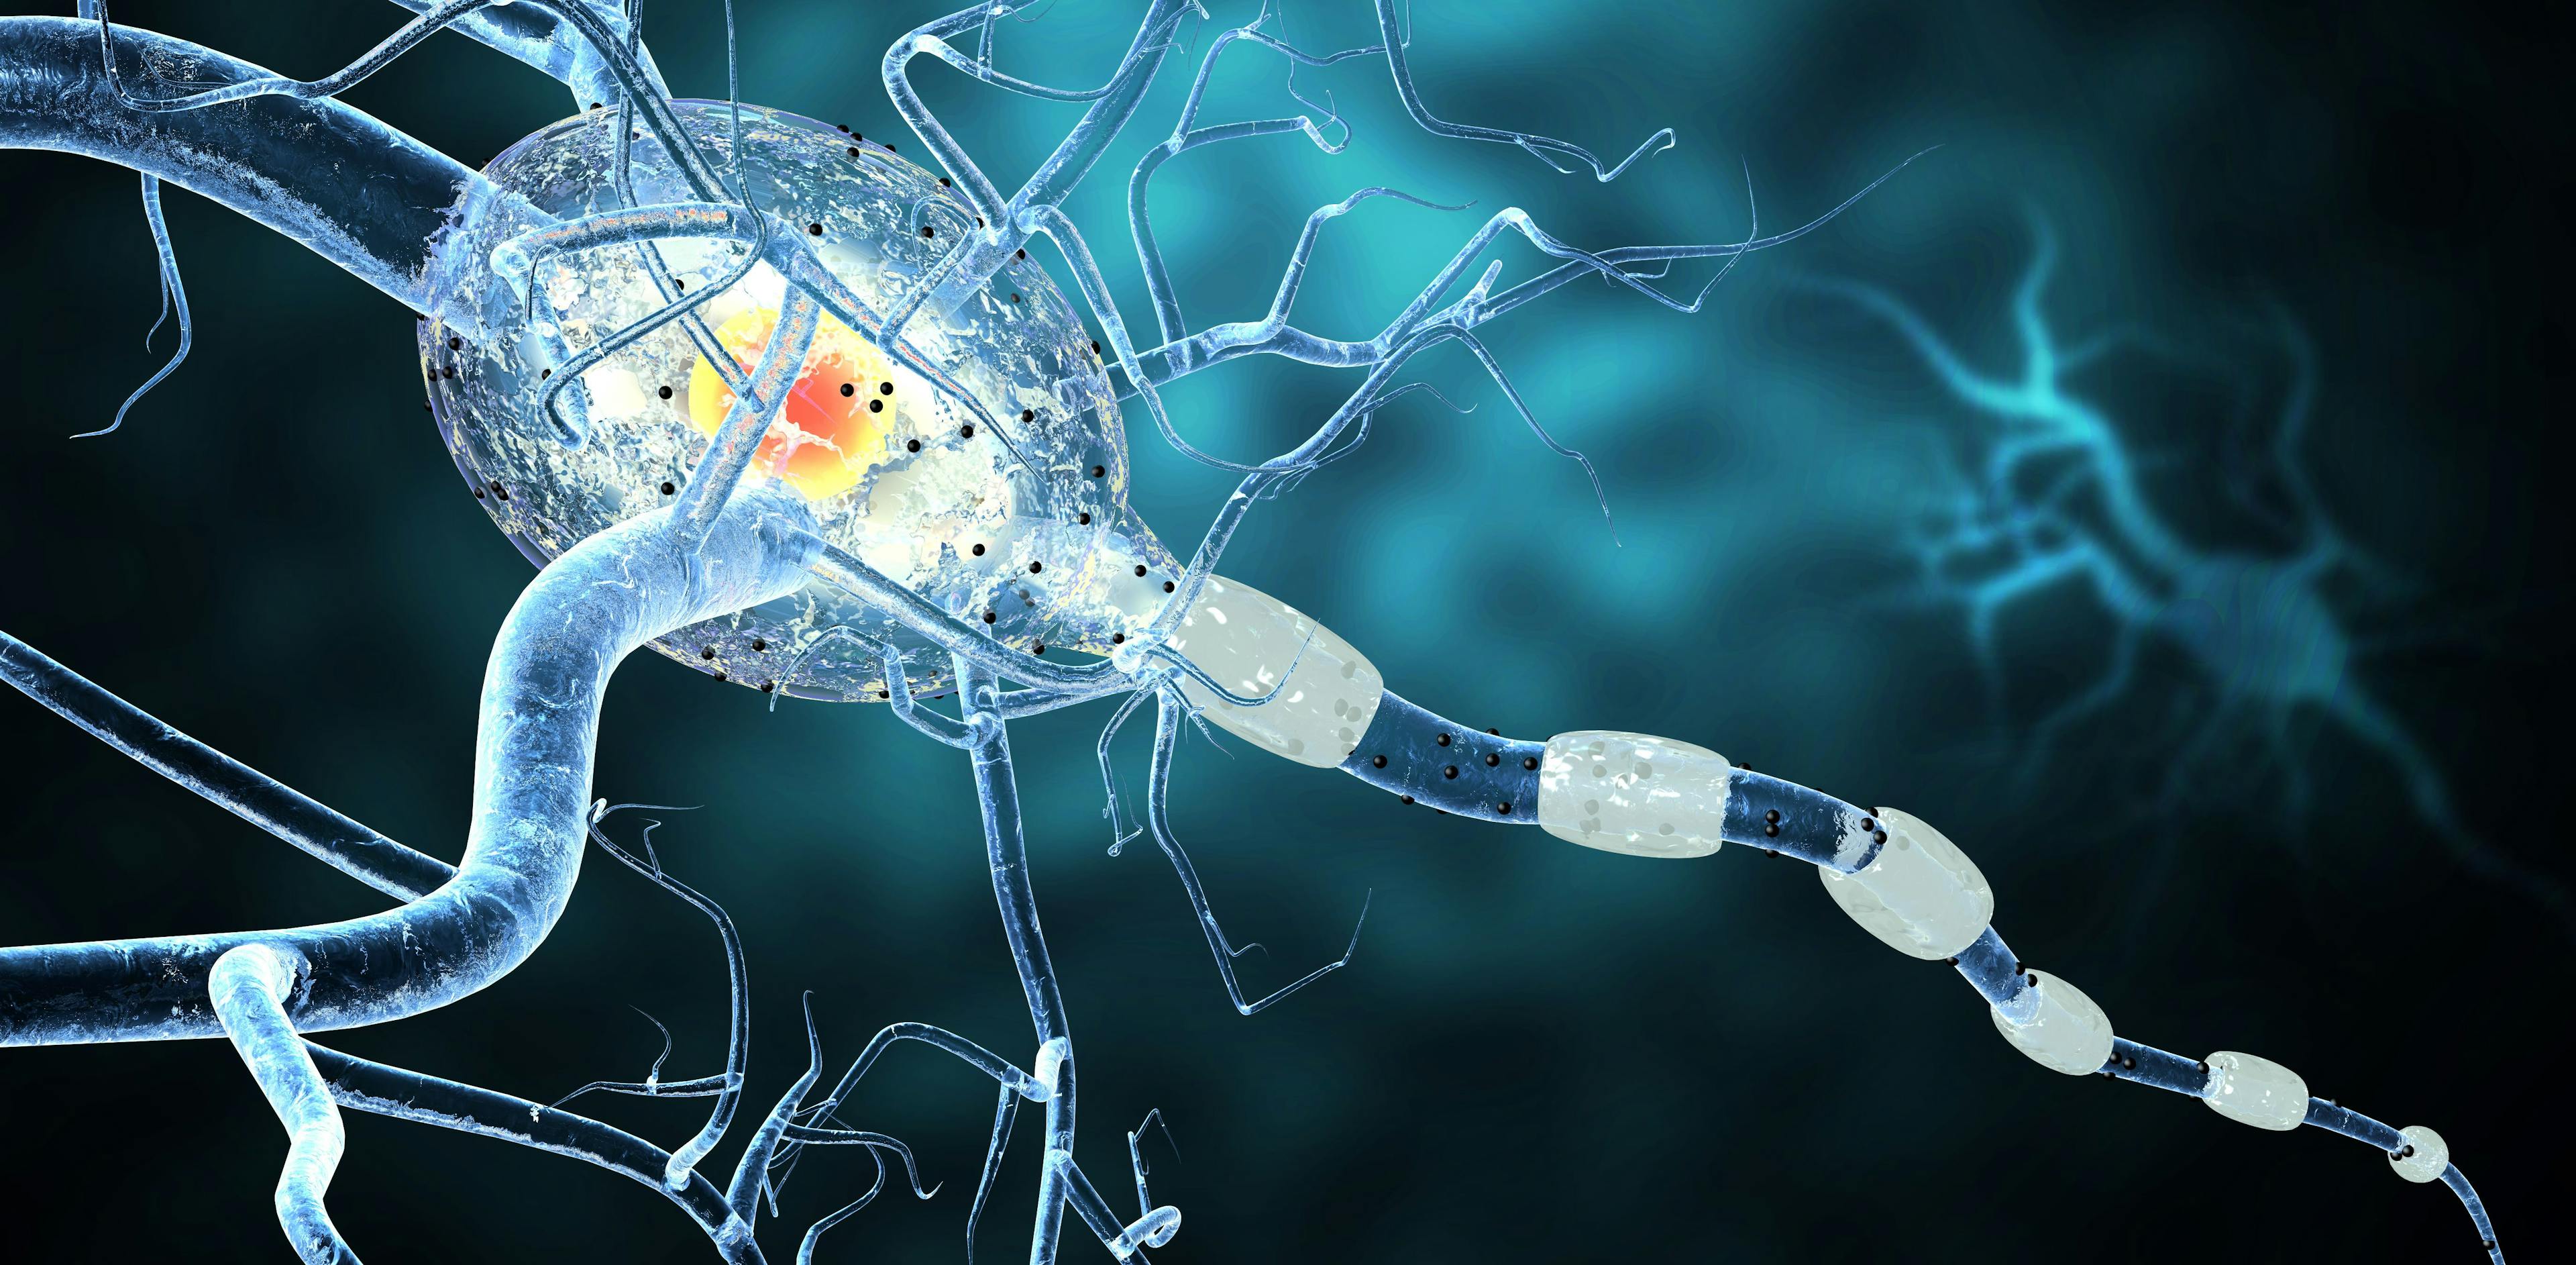 nerve cells, Neurologic Disease, tumors,brain surgery | Image Credit: ralwel - stock.adobe.com